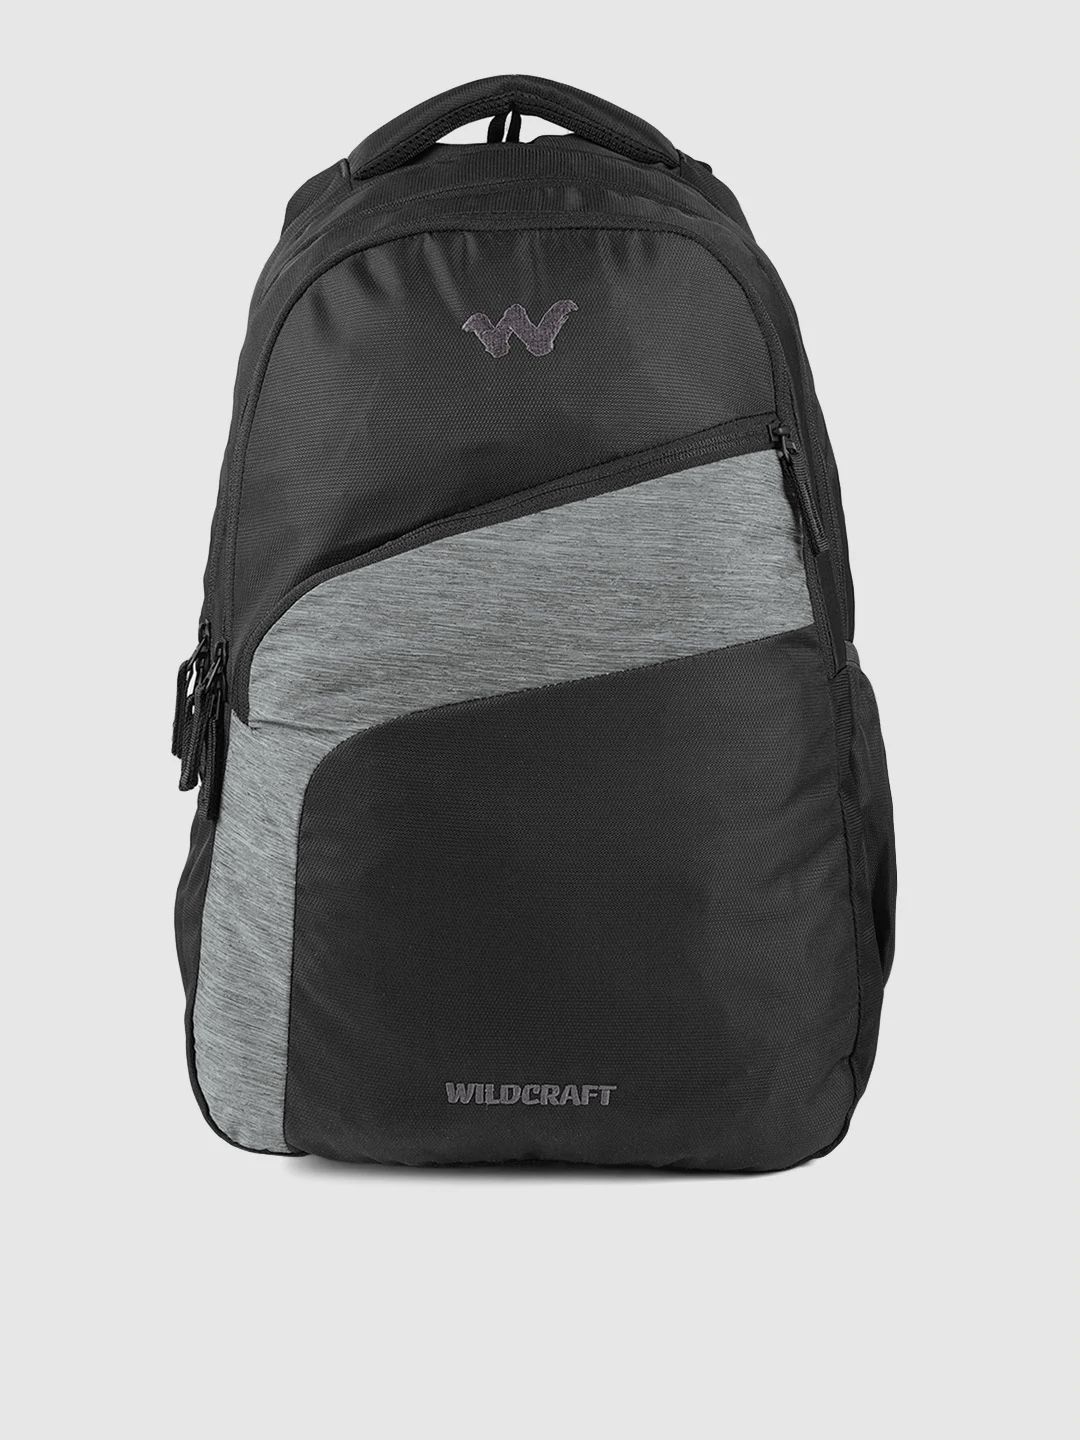 Wildcraft Unisex Black & Grey Solid Virtuso 2.0 Backpack Price in India